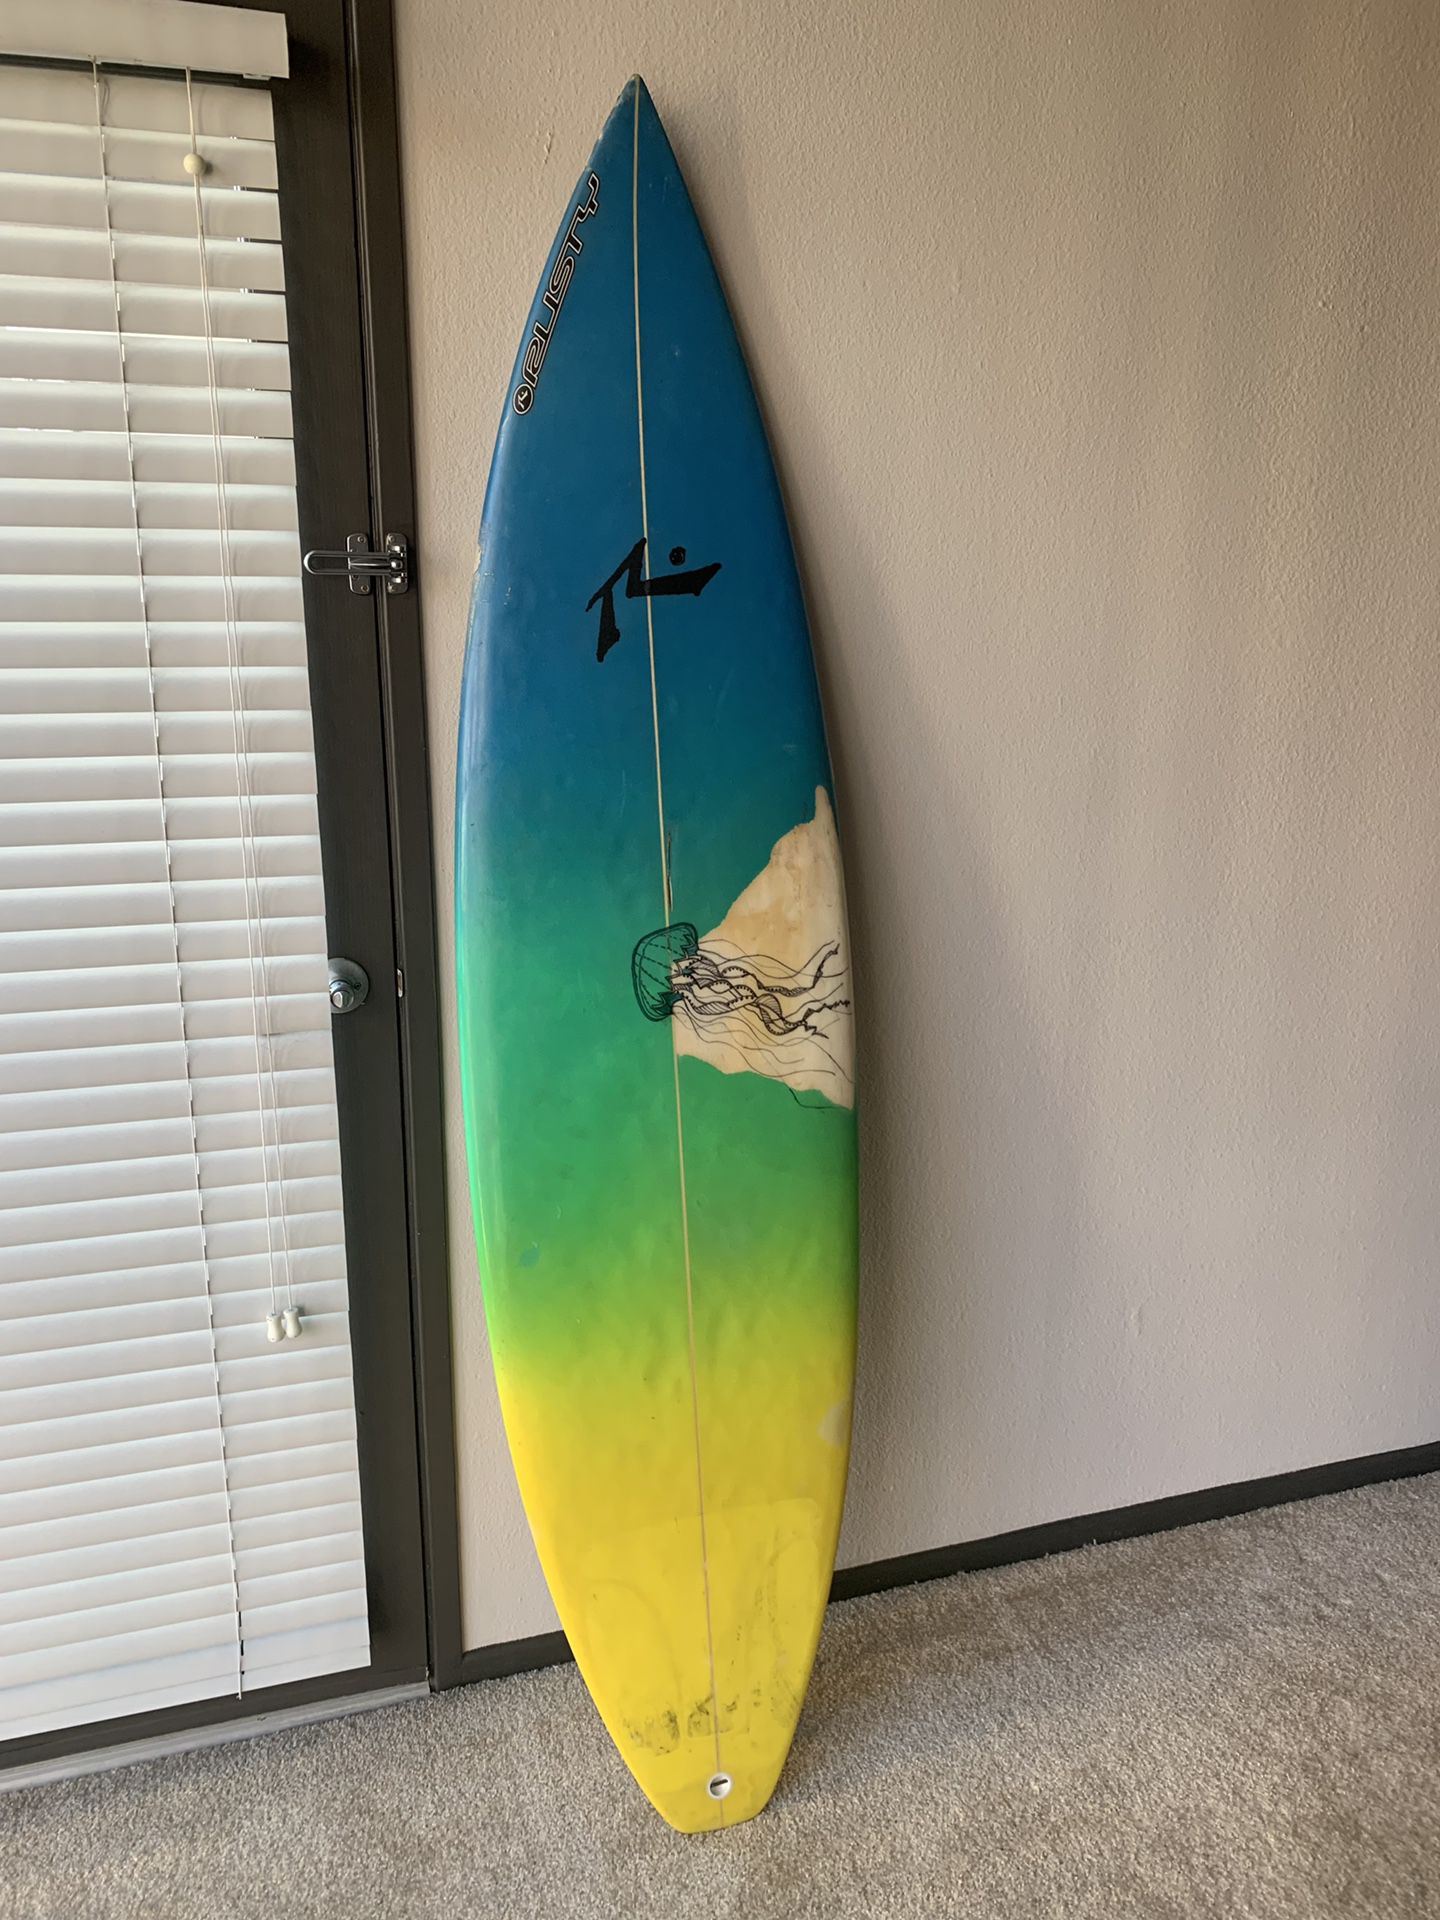 Decorative surfboard